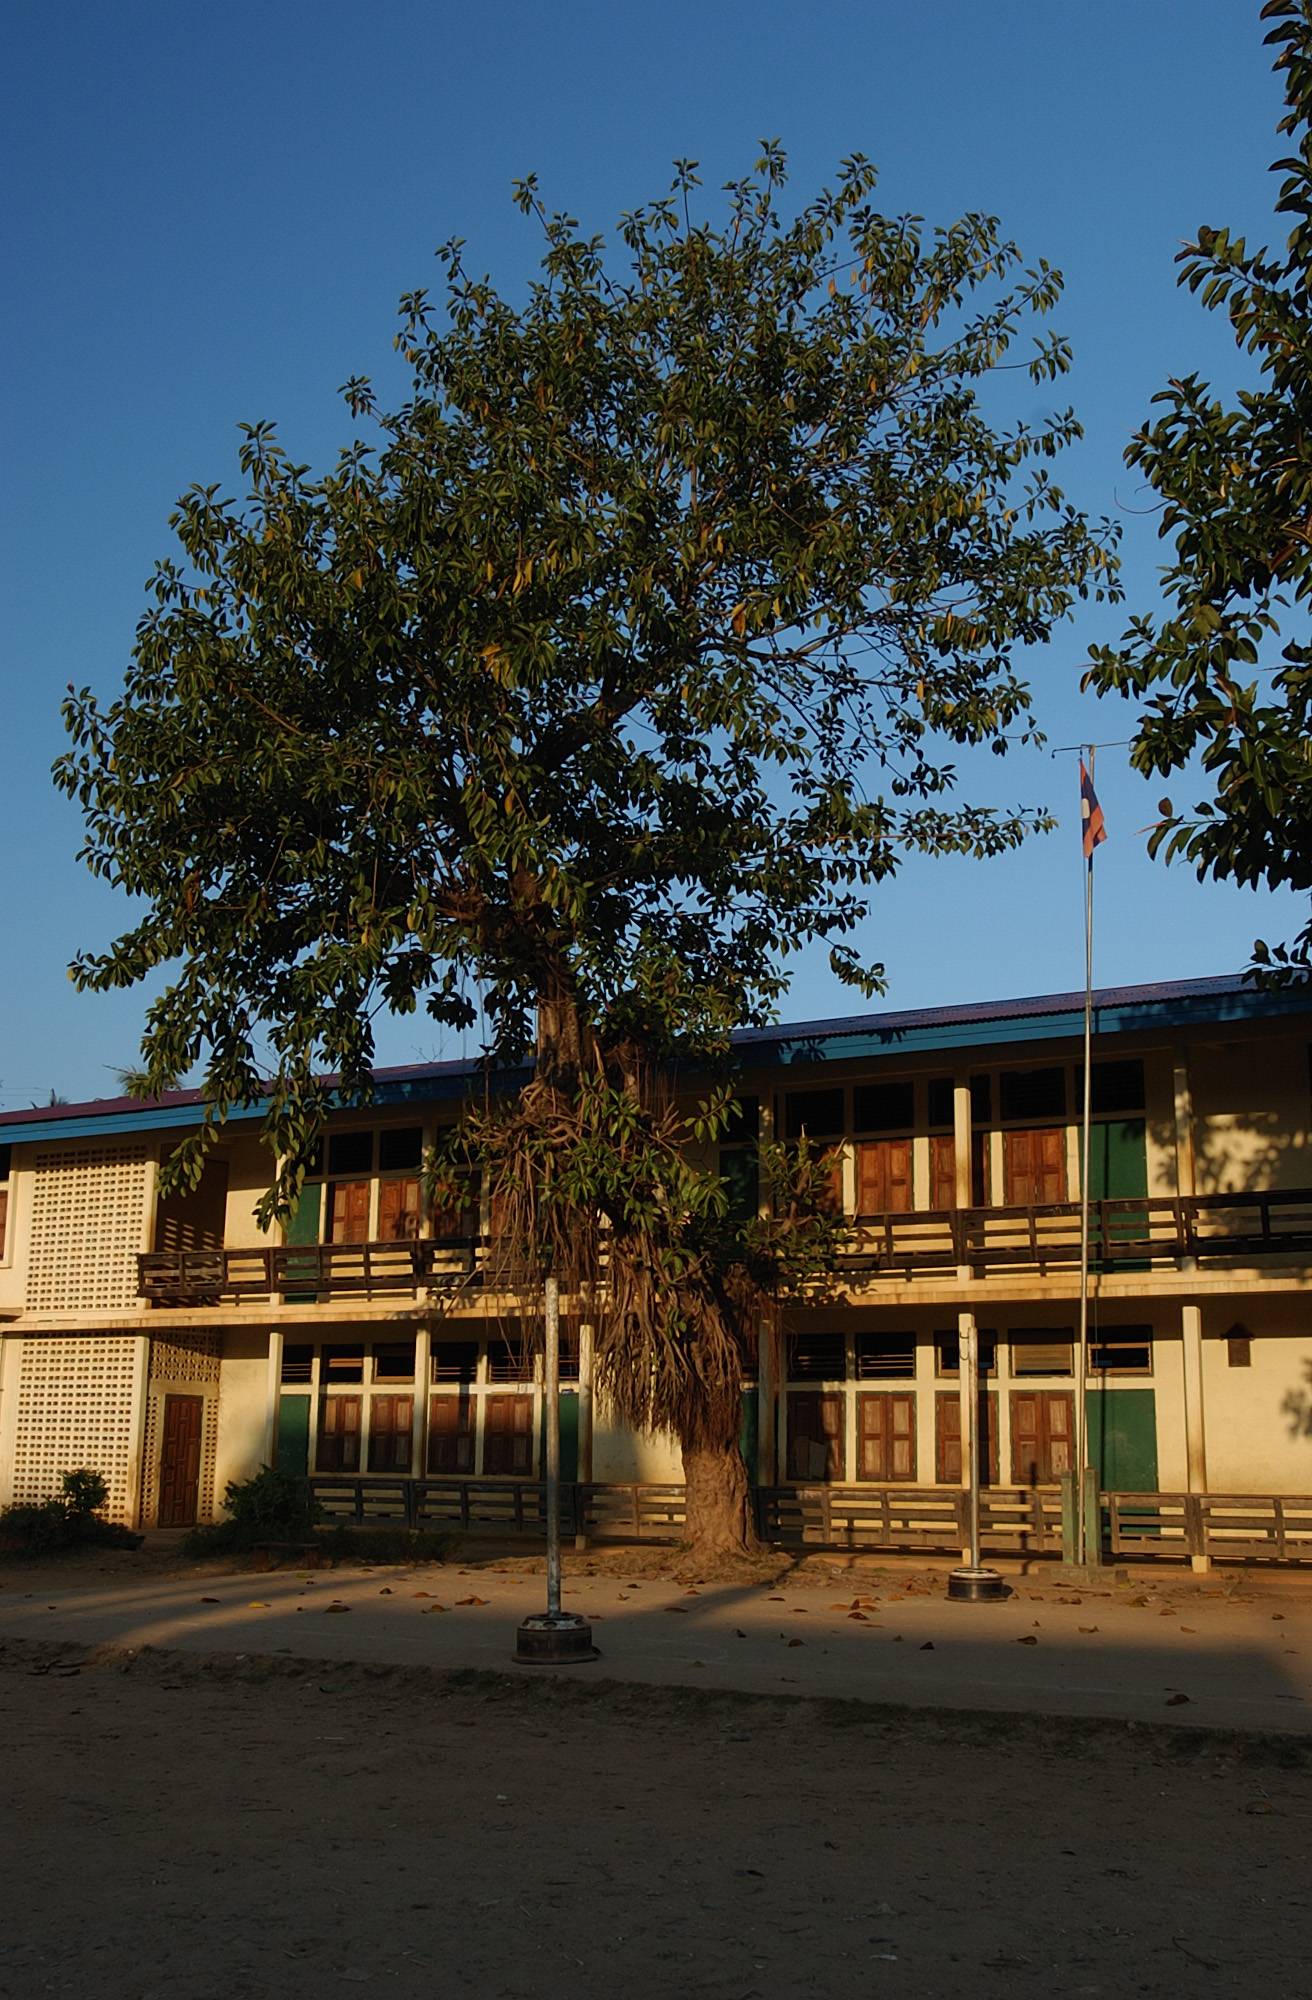 Sak and Jits Secondary School in Houay Xai, Laos